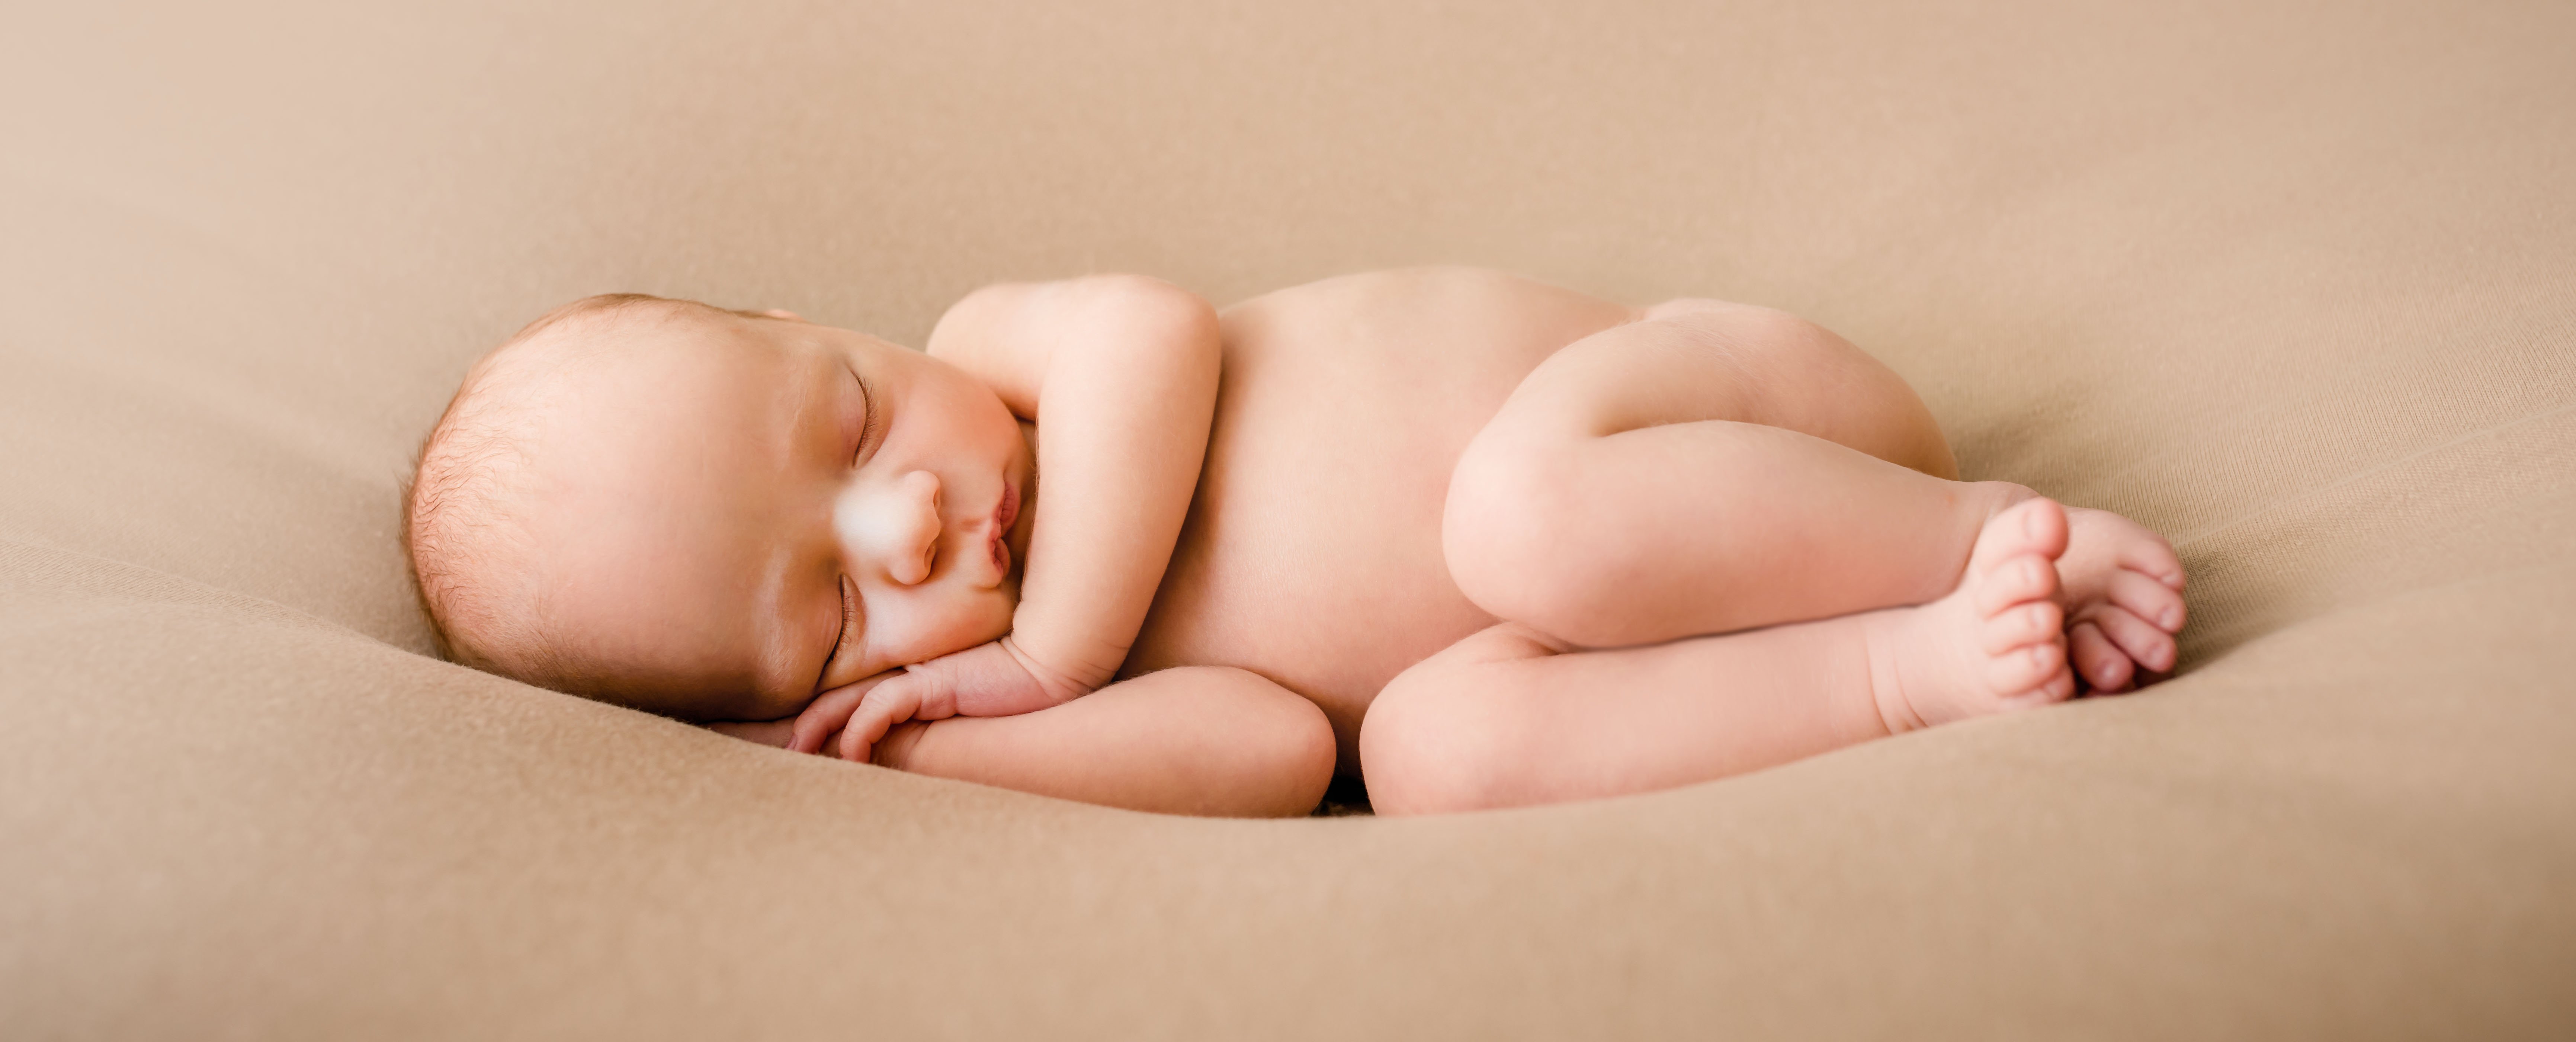 newborn baby boy sleeping on his side on tan blanket